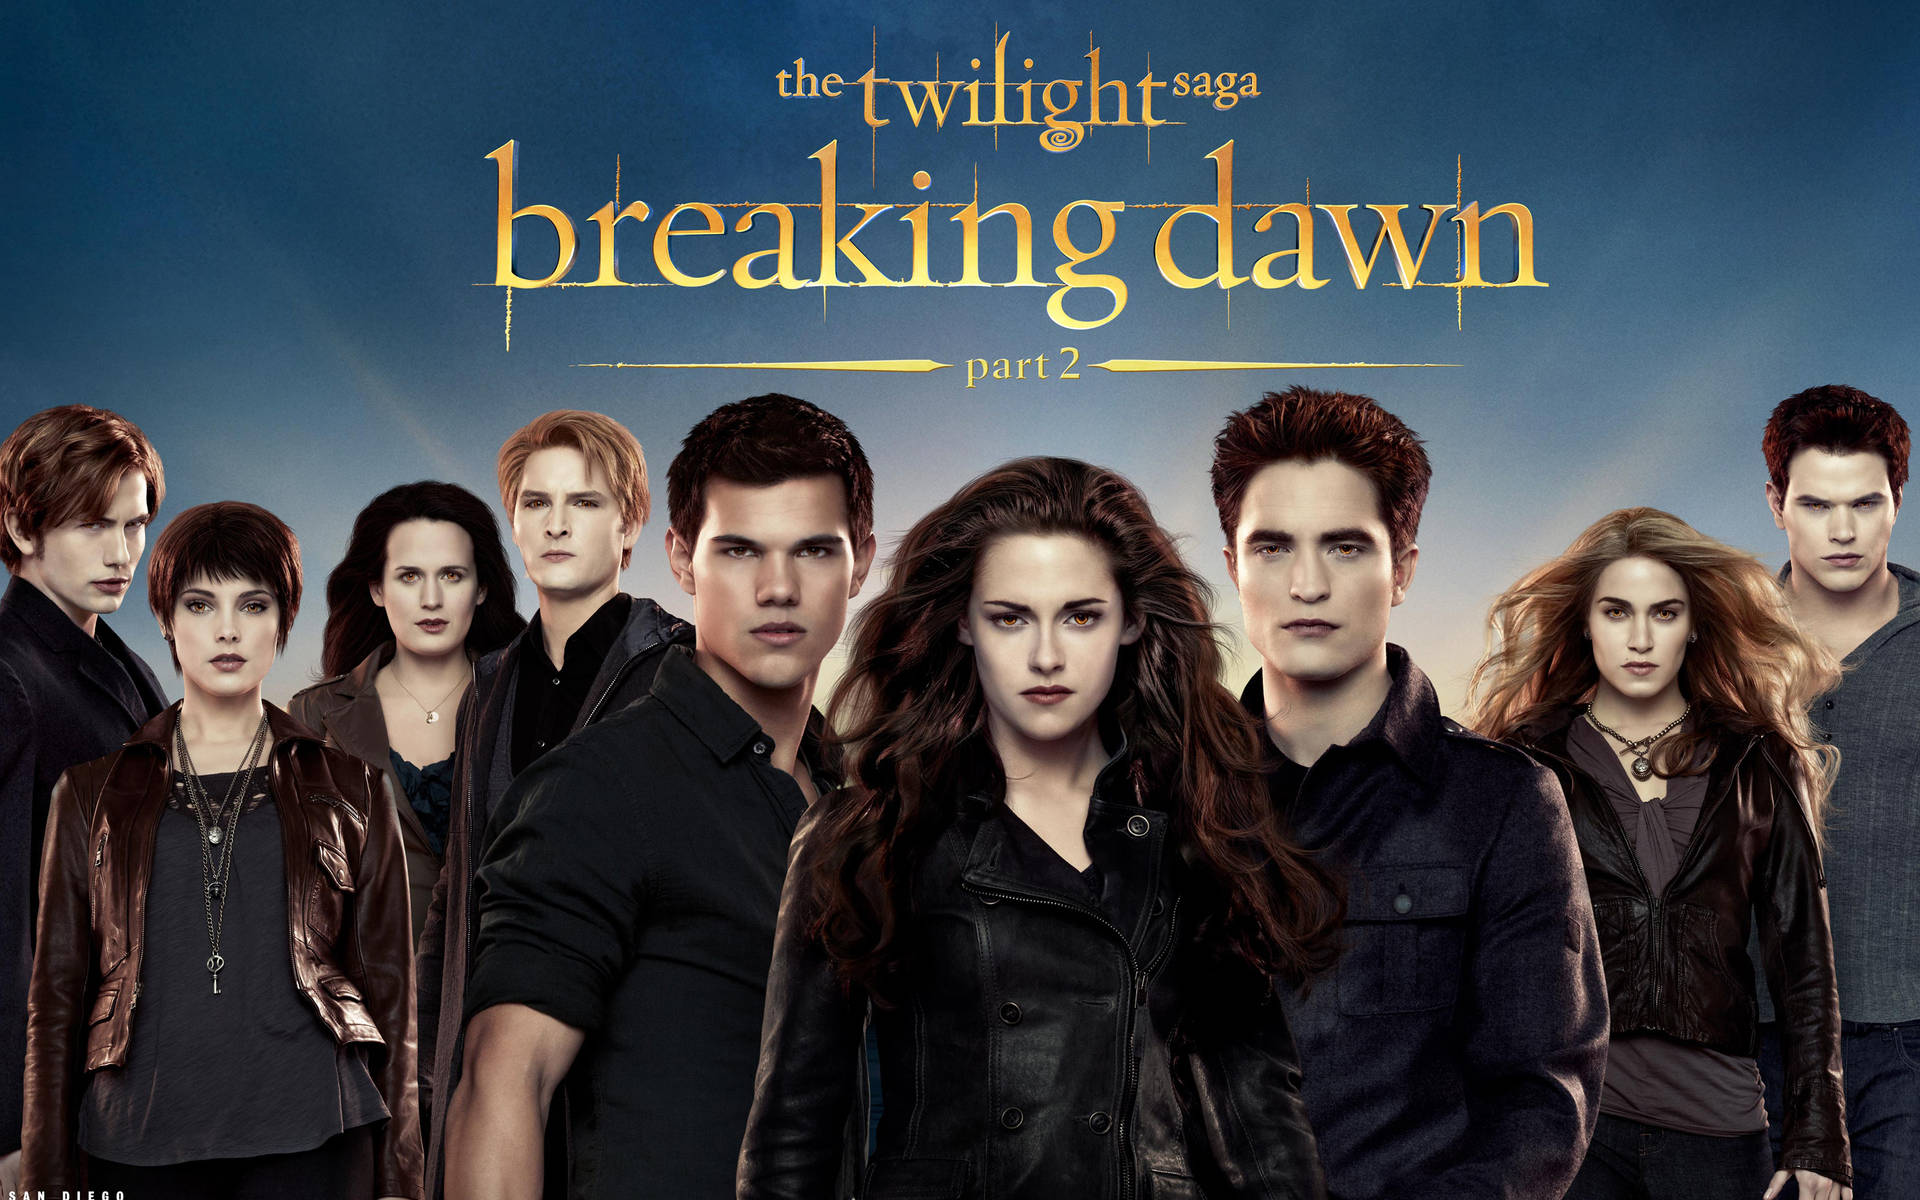 The Twilight Saga Movie Poster Background